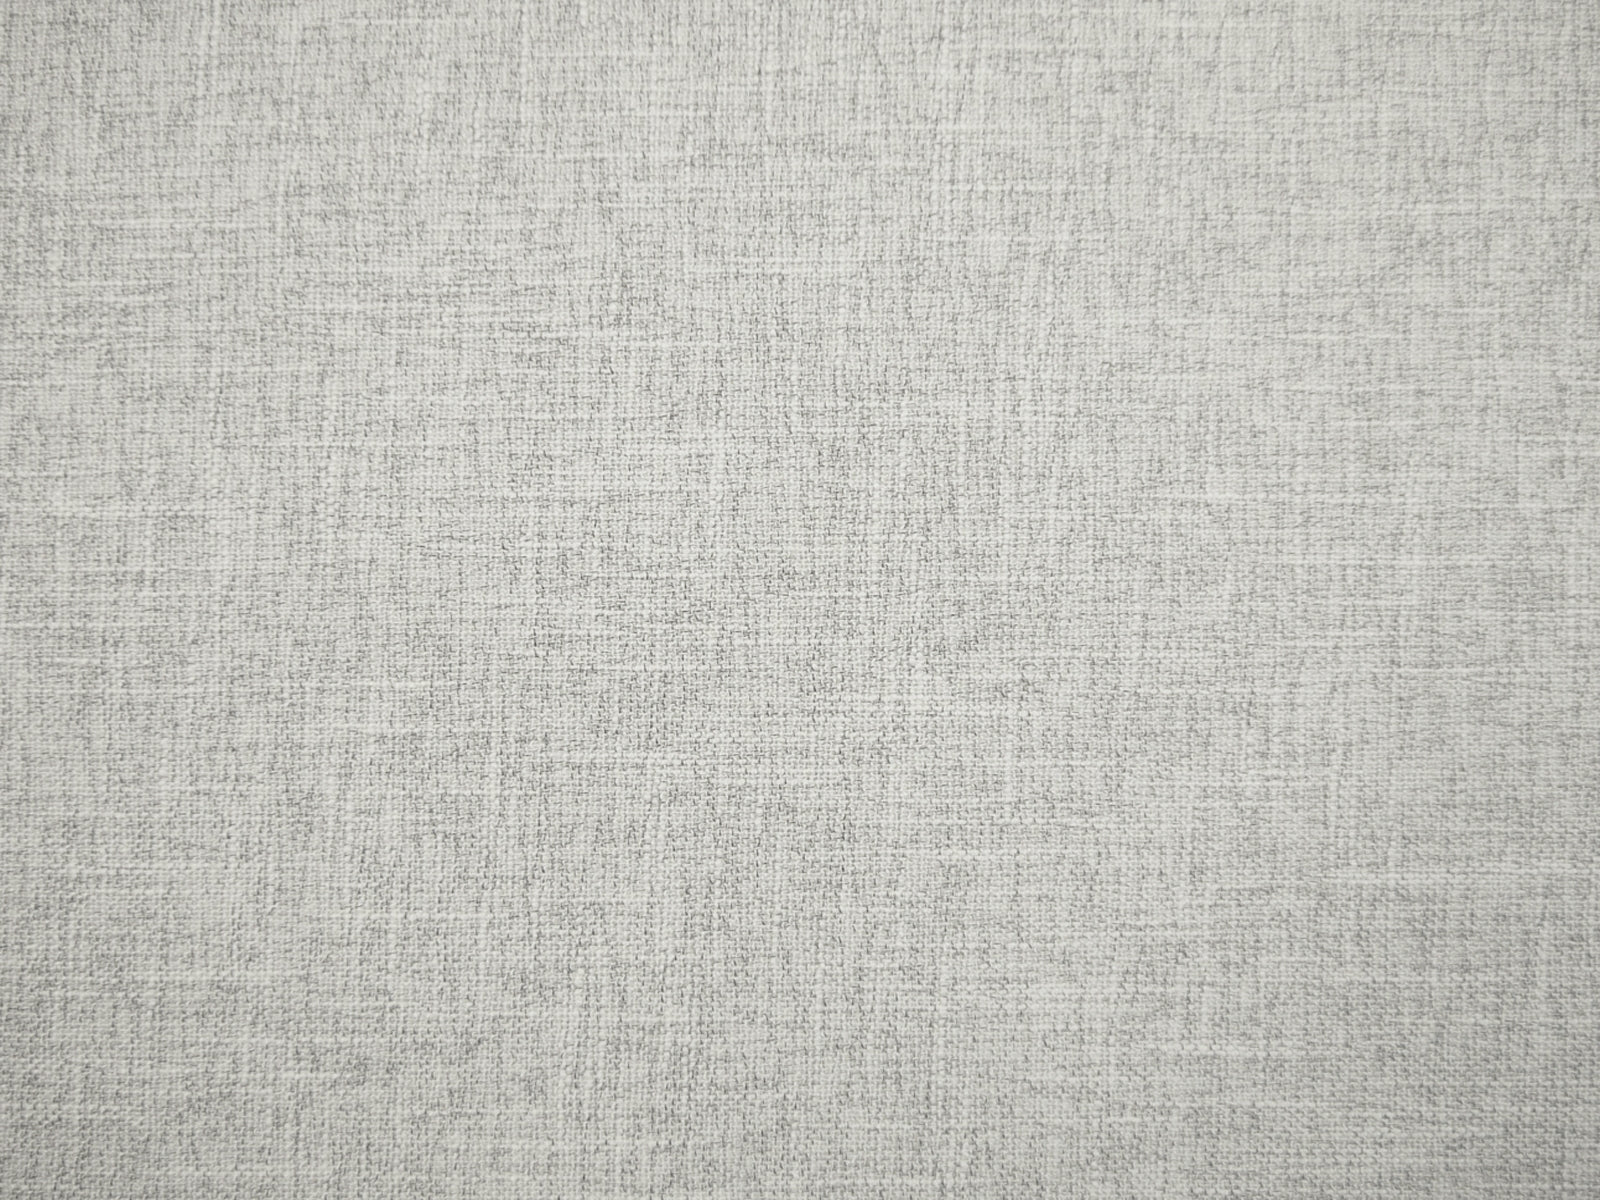 Bacio Fabric Samples - Rydan Interiors